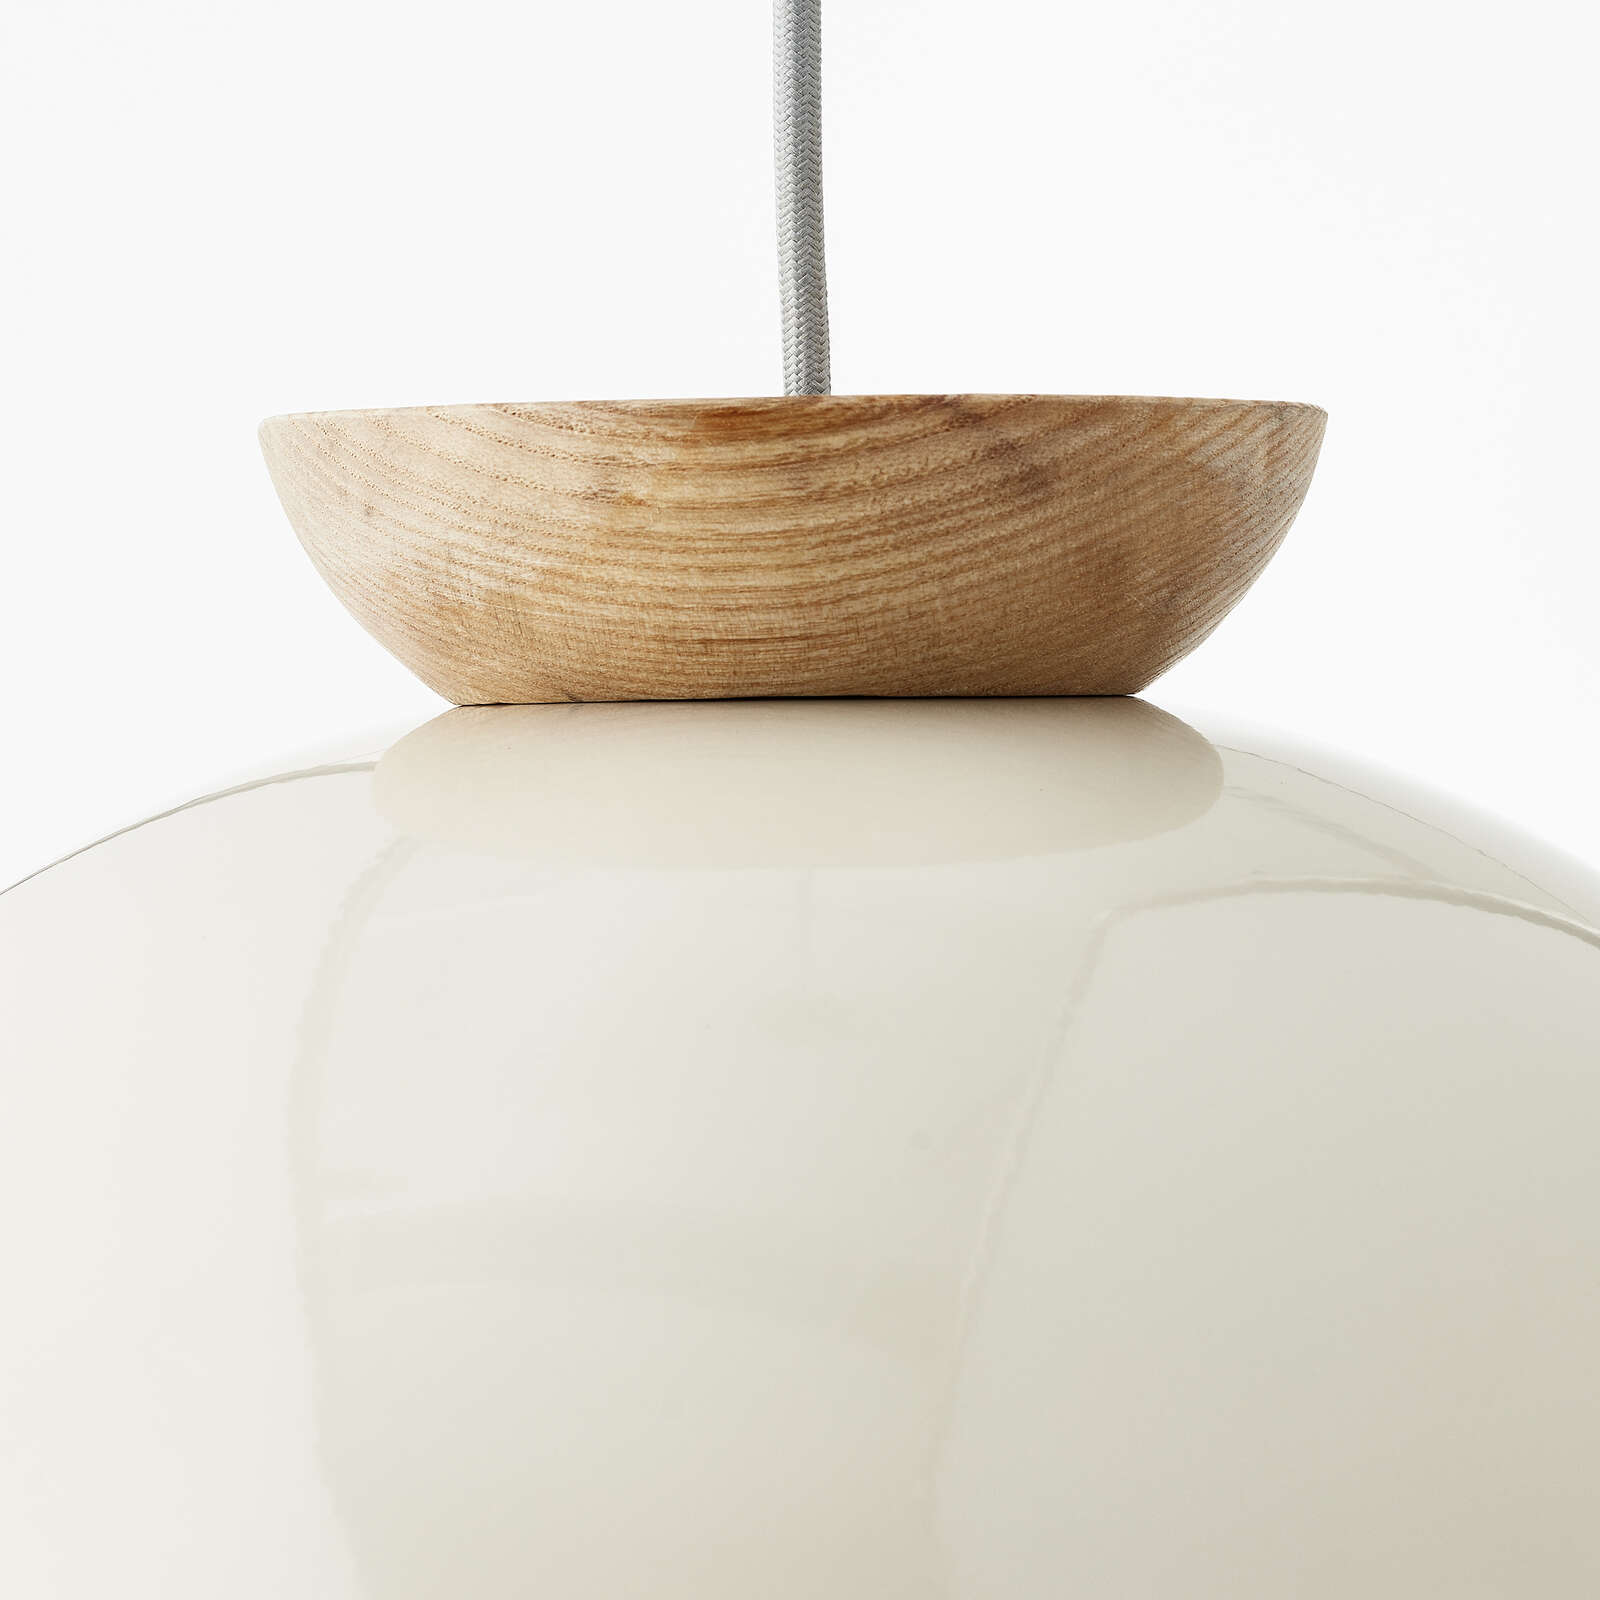             Lámpara colgante de madera - Lorena 1 - Beige
        